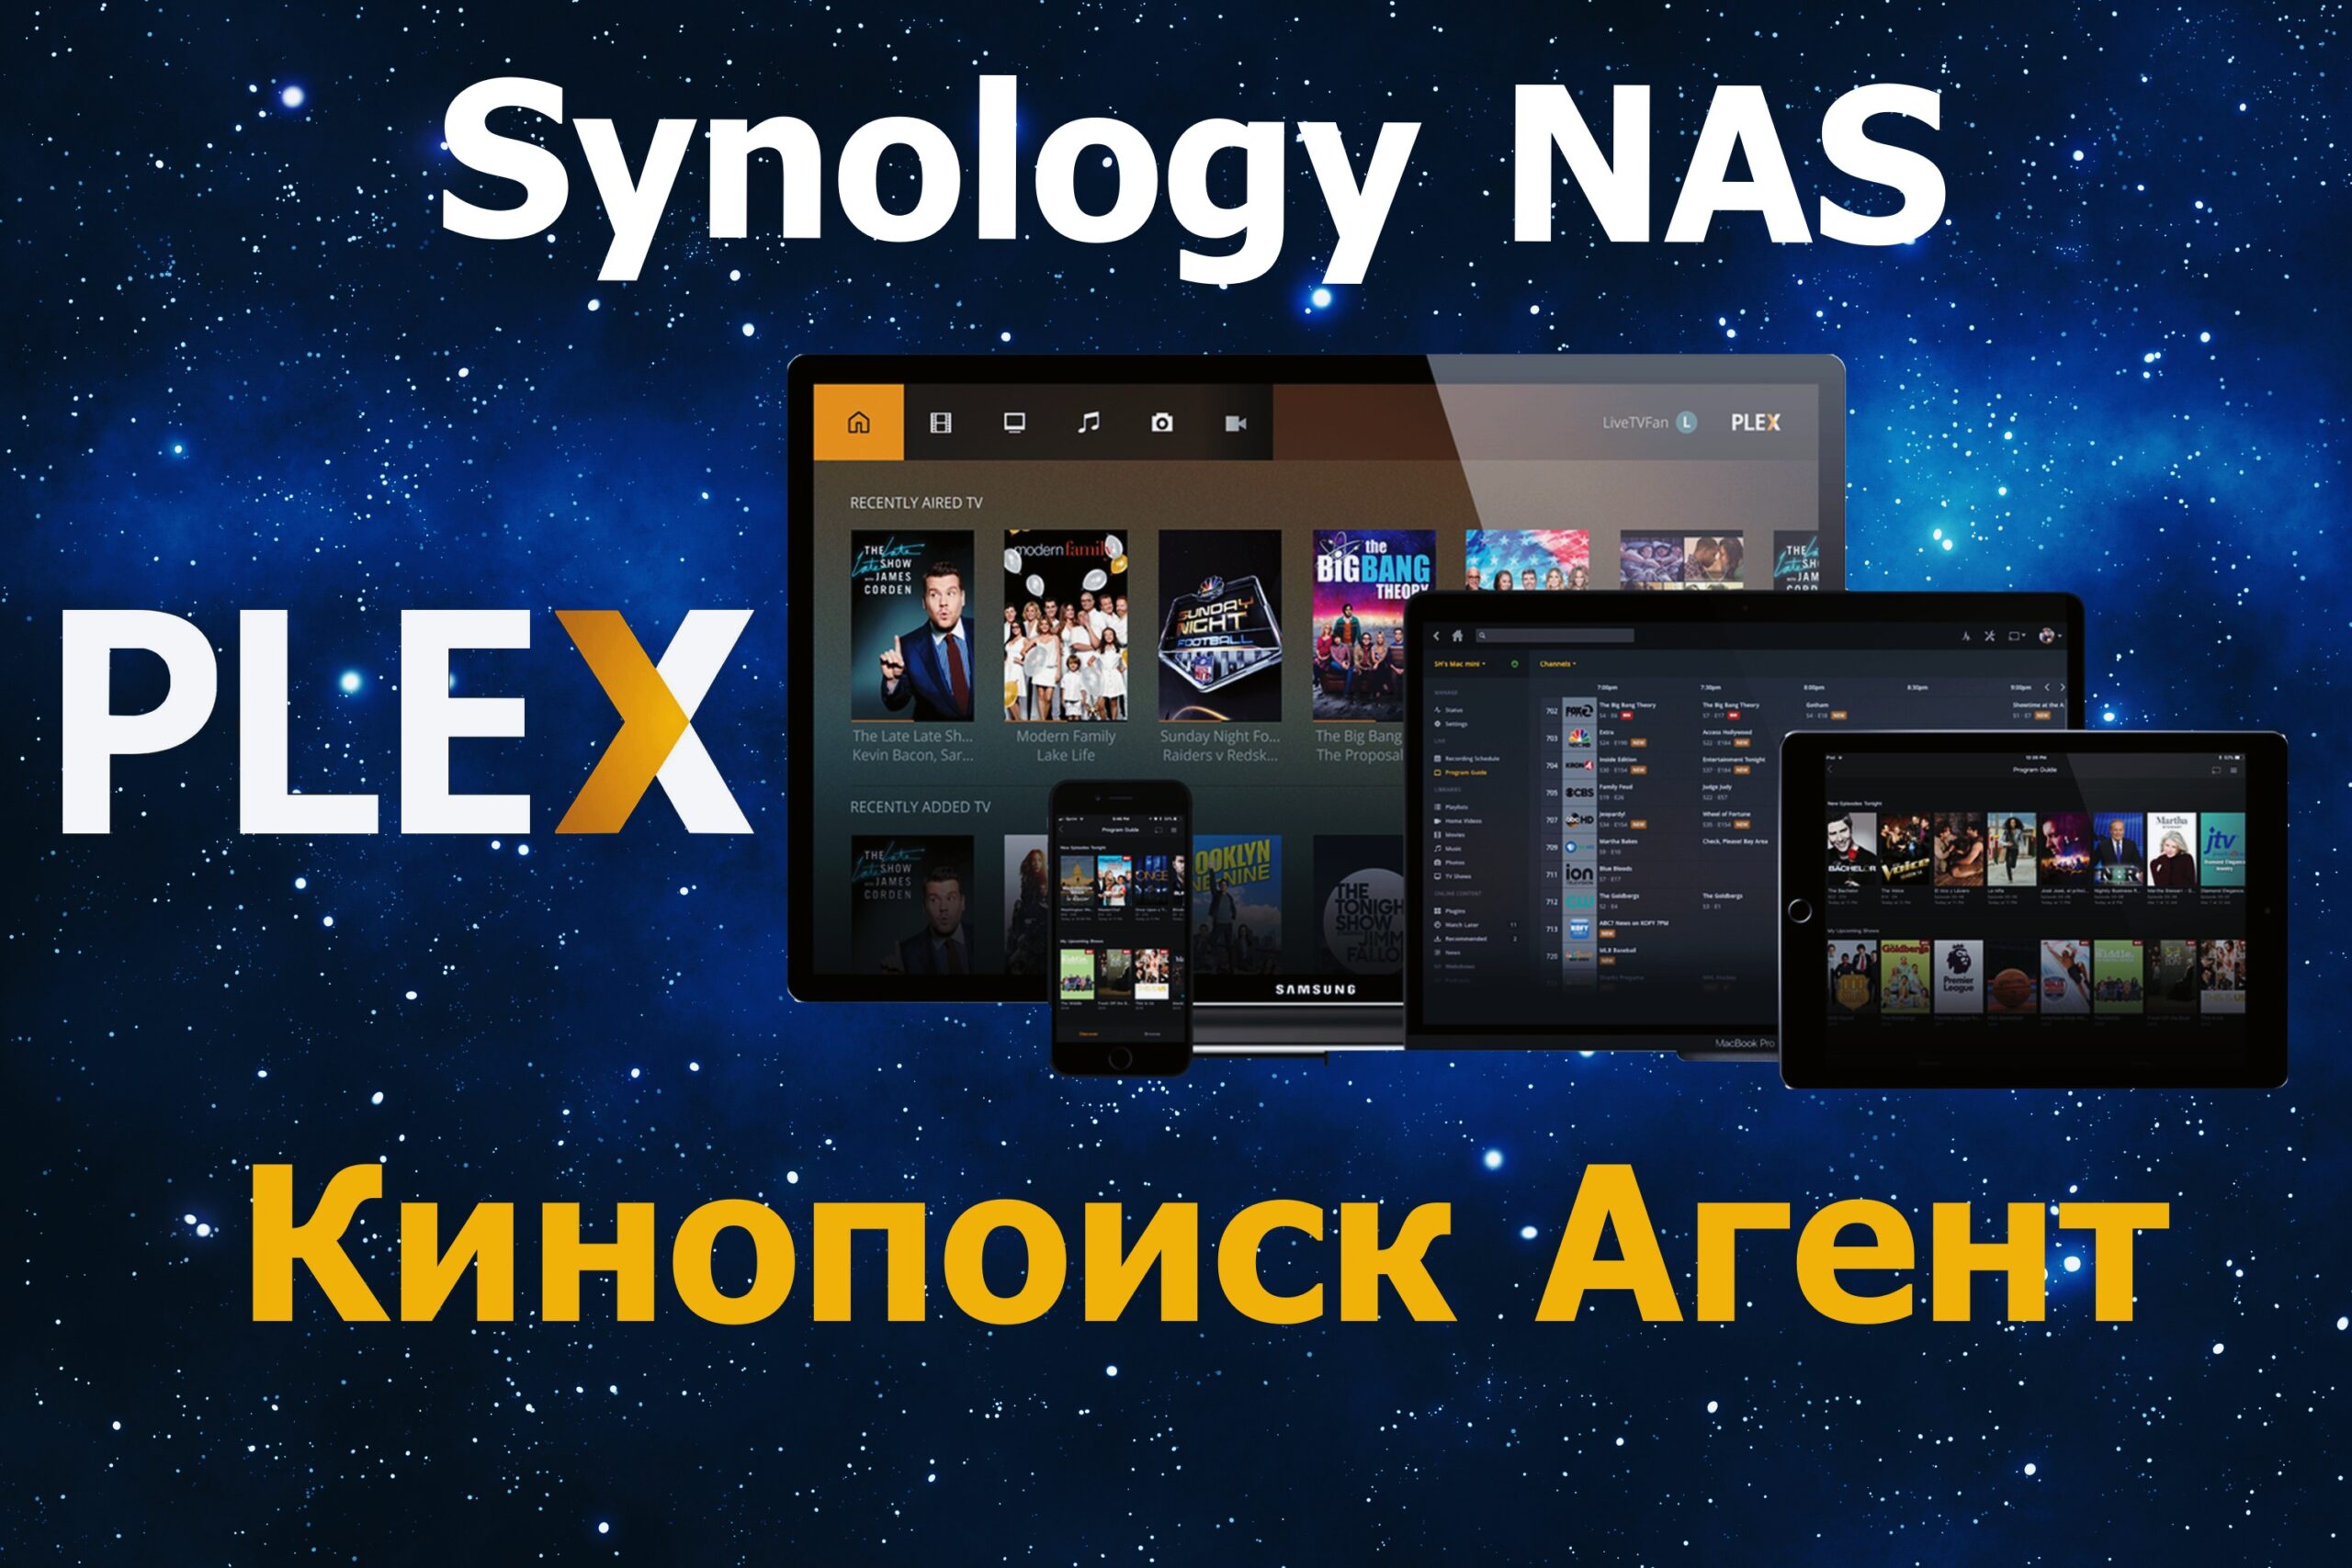 Read more about the article Установка агента Кинопоиск в Plex на Synology NAS